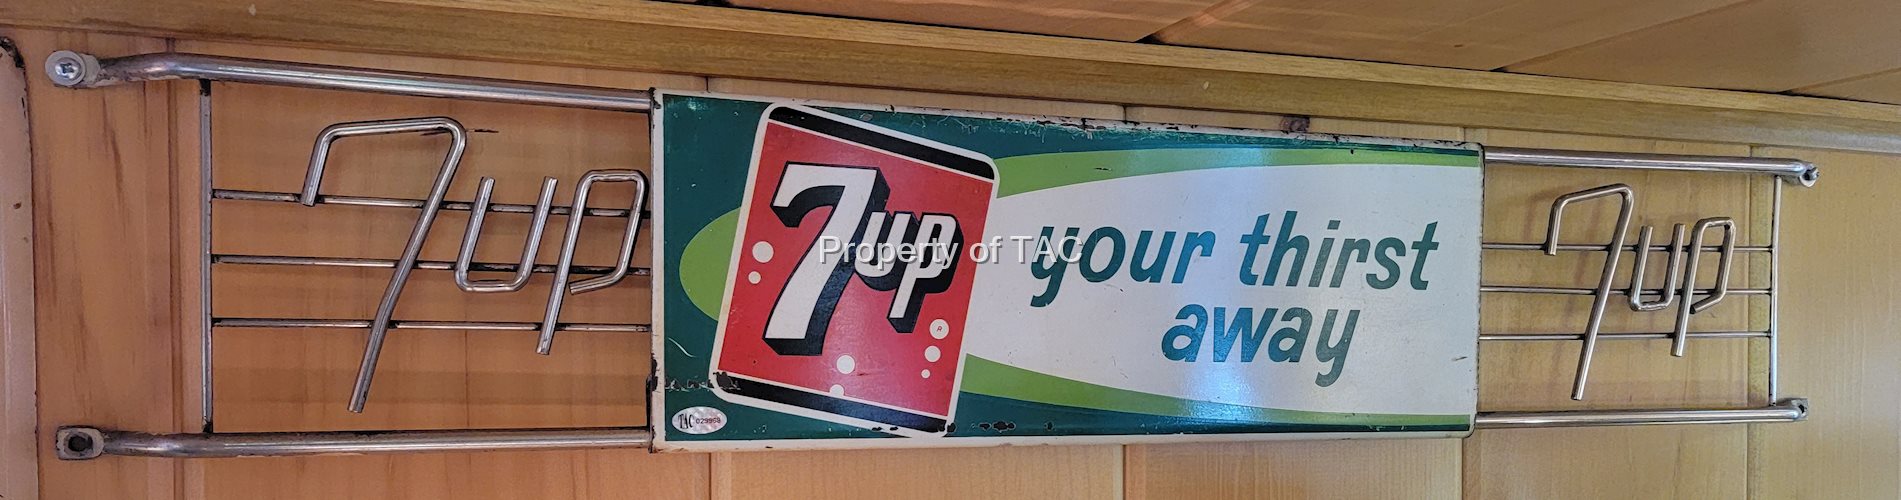 7up "your thirst away" Metal Door Push Sign